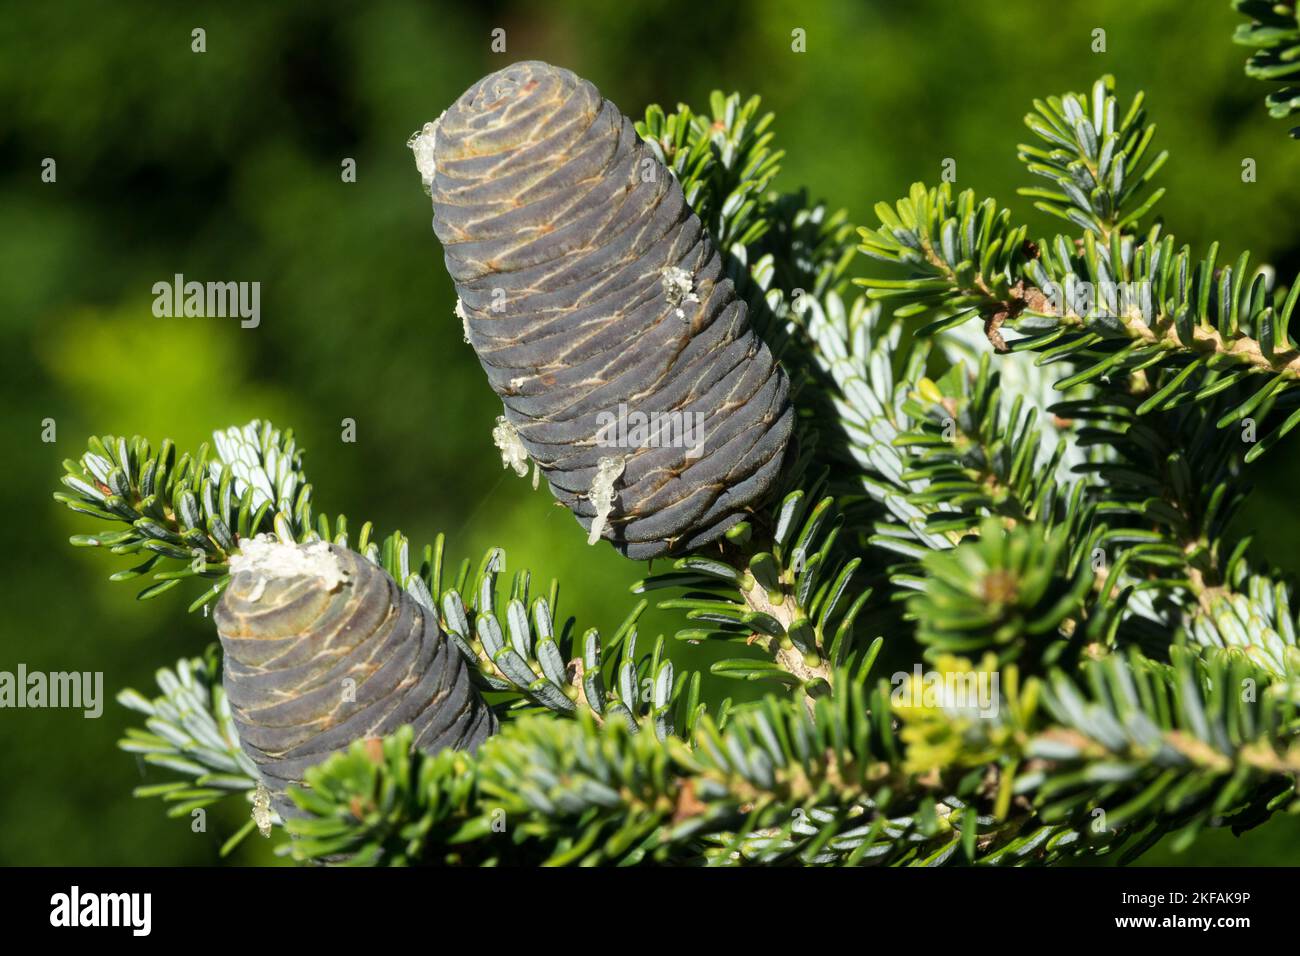 Korean fir cone, Abies koreana cone 'Ebertz Zwerg', Cone on Branch Stock Photo